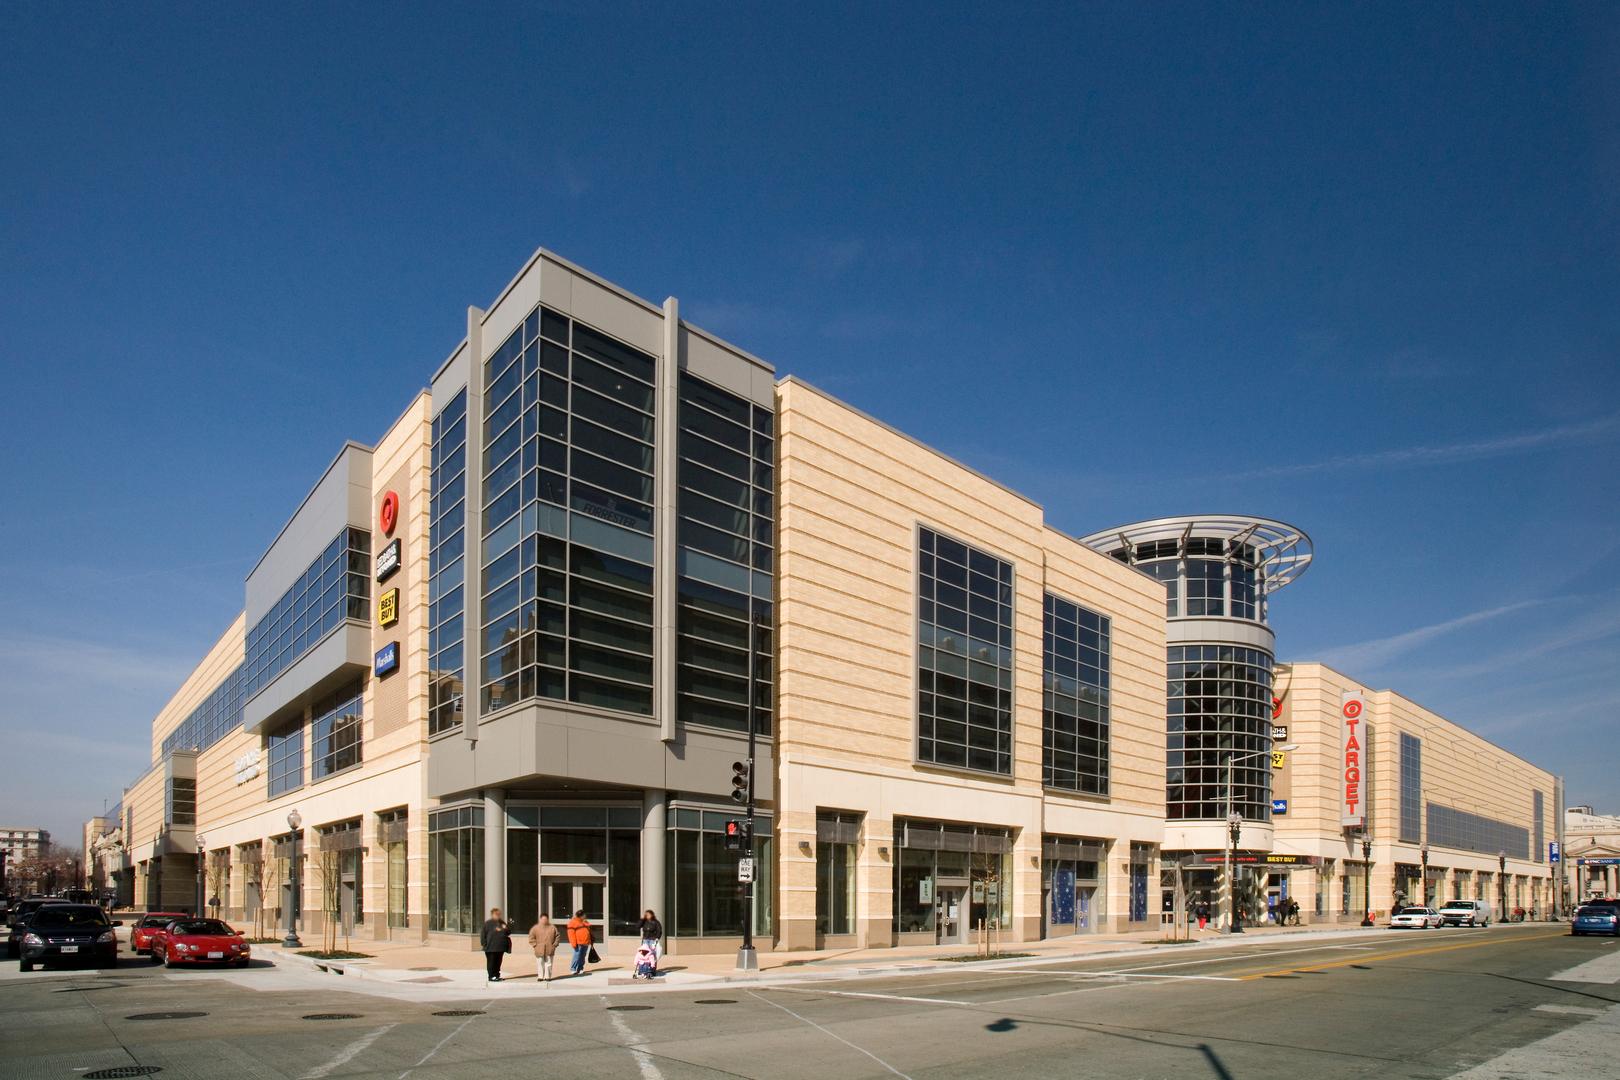 D.C. USA Retail Complex